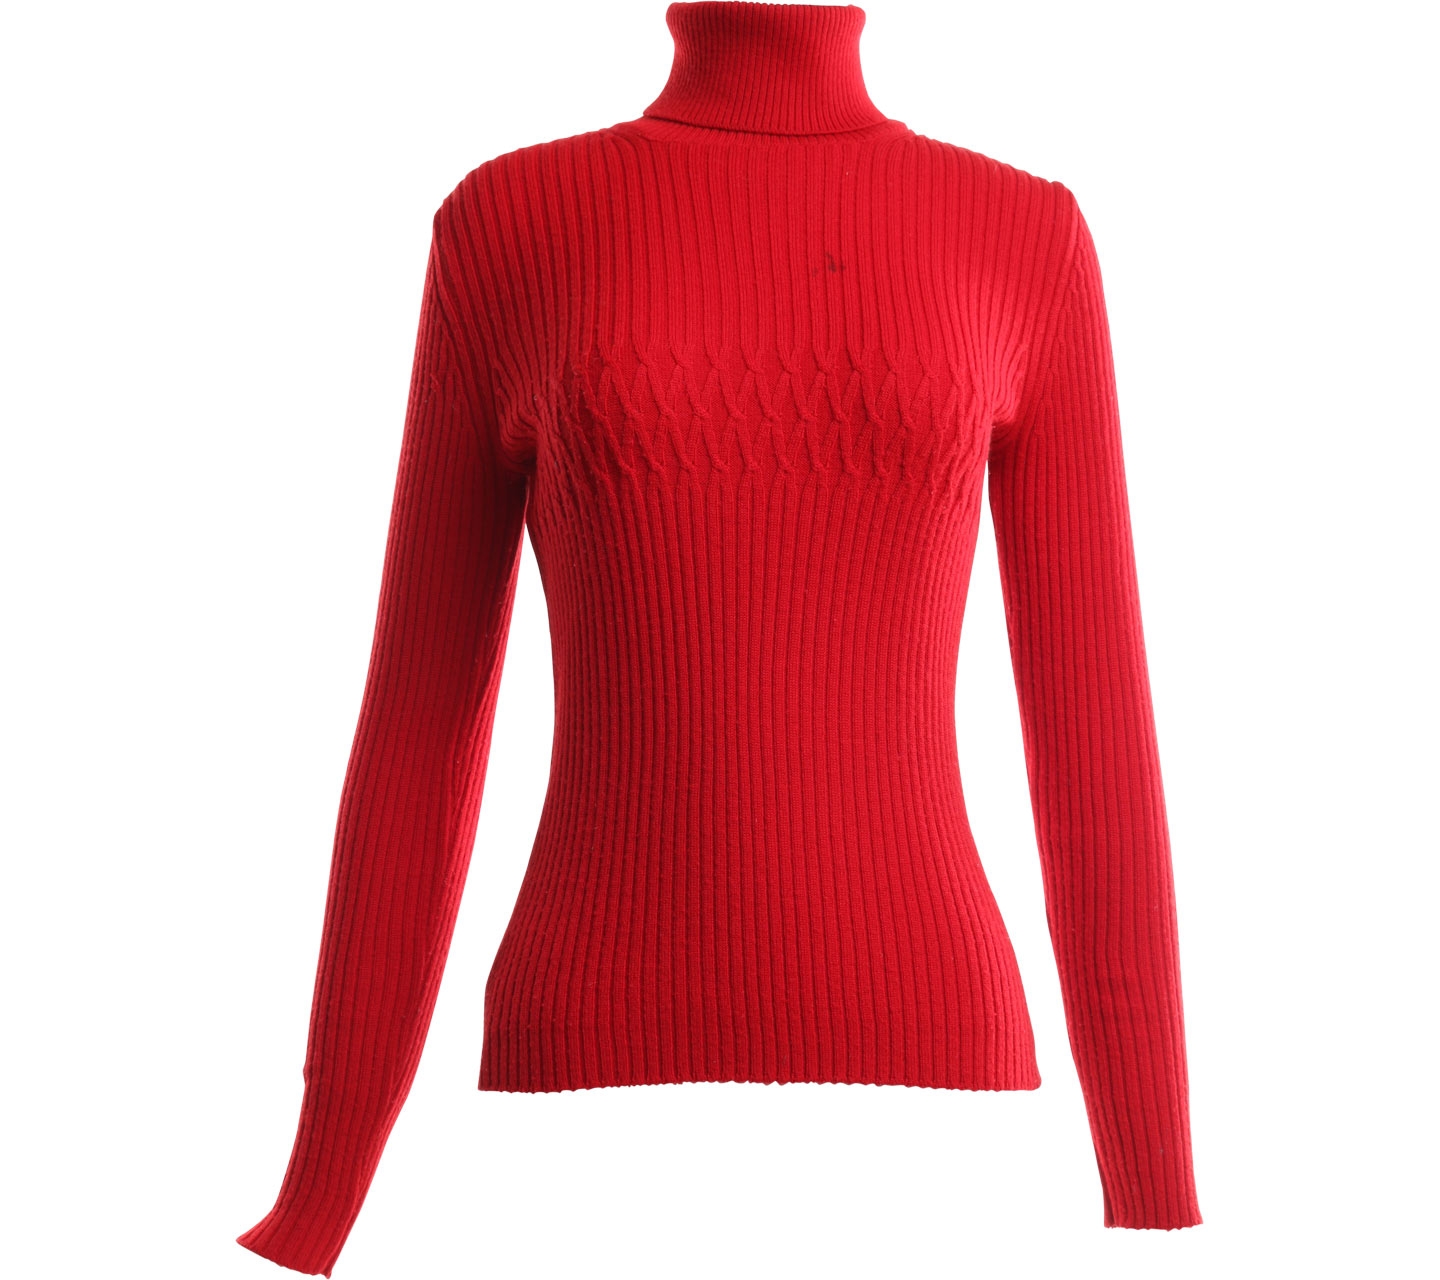 Benetton Red Turtleneck Sweater